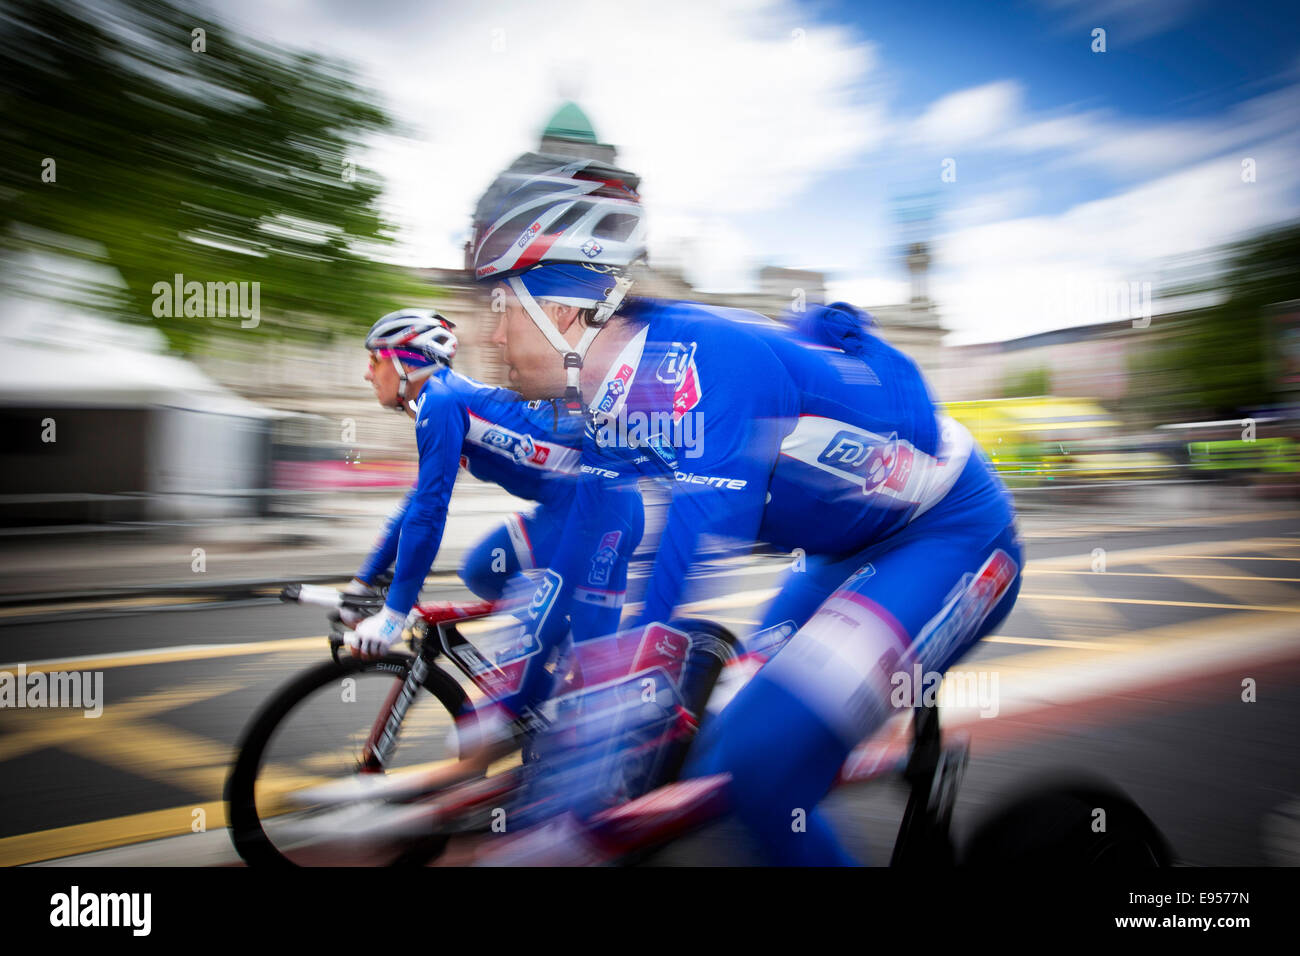 Giro d'Itala traguardo a Belfast, Irlanda del Nord 2014 Foto Stock